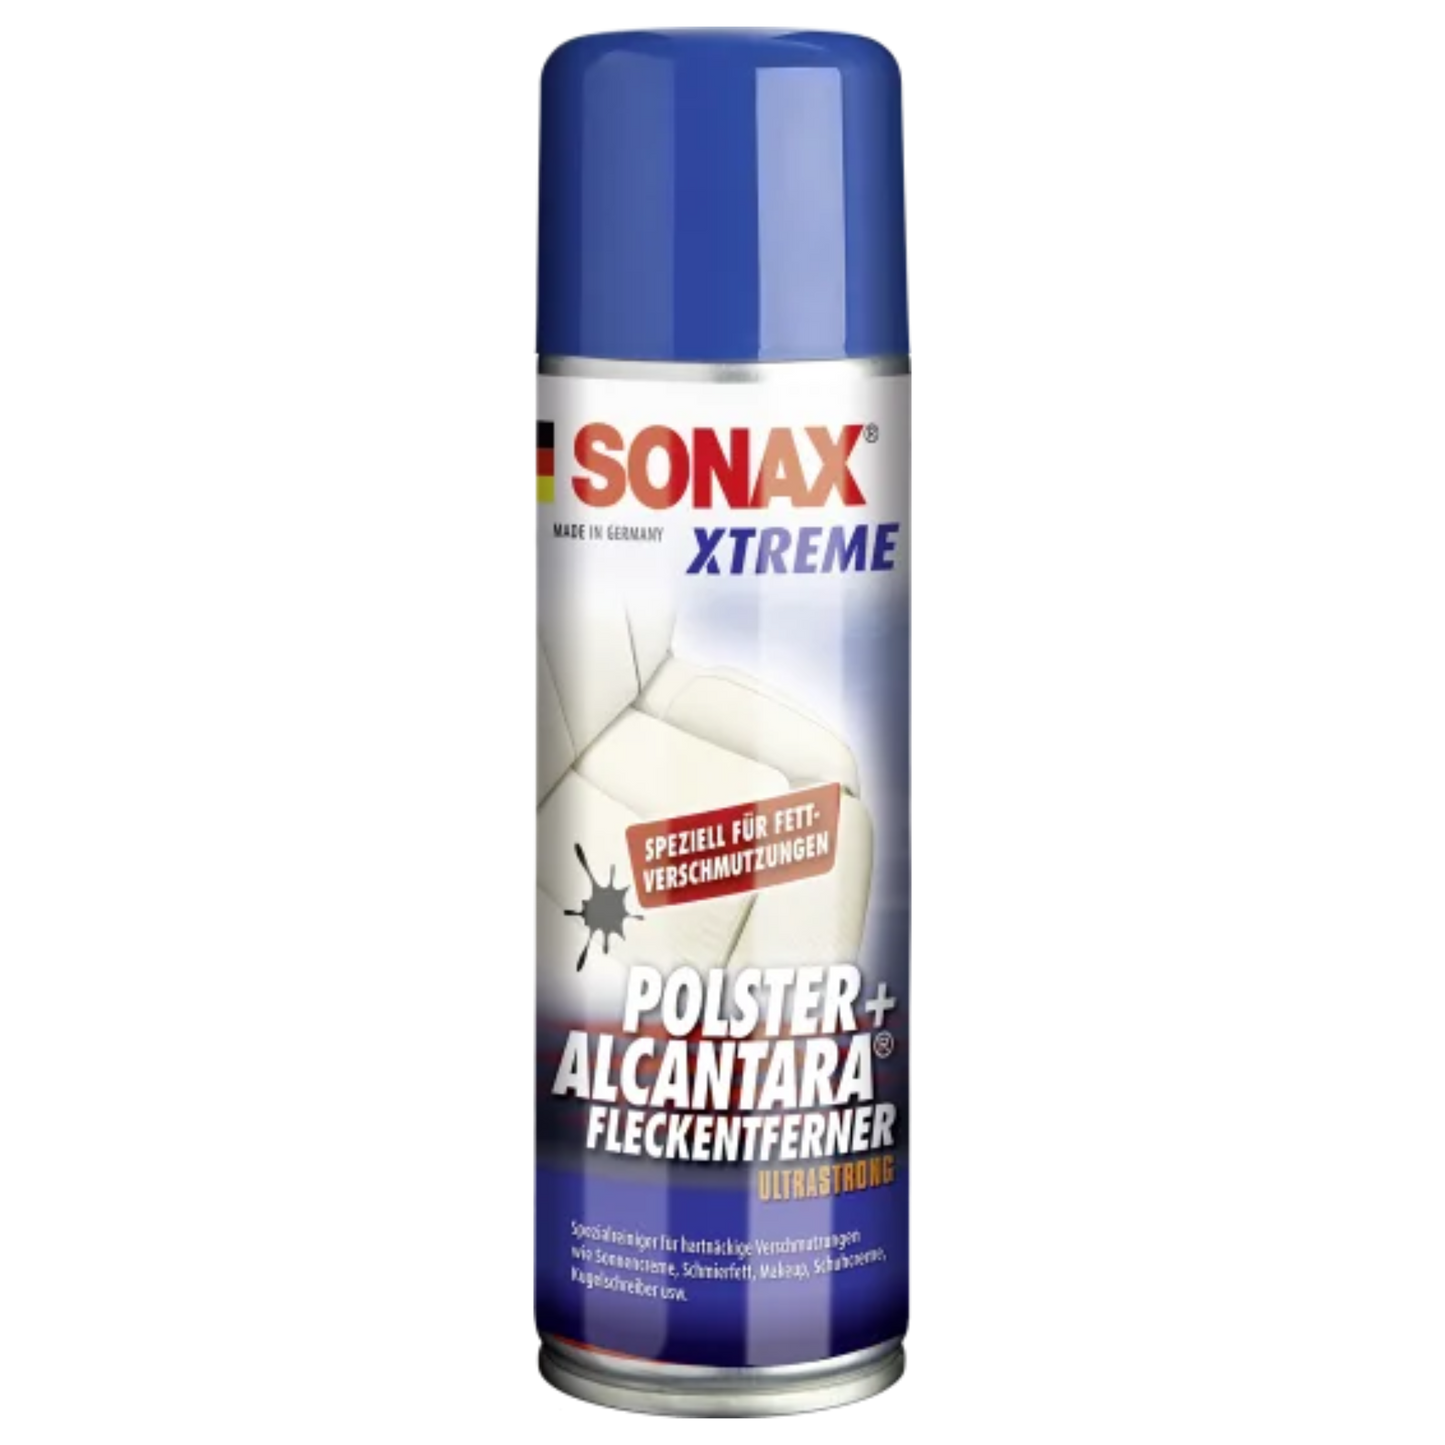 SONAX XTREME upholstery + Alcantara® stain remover, 300ml